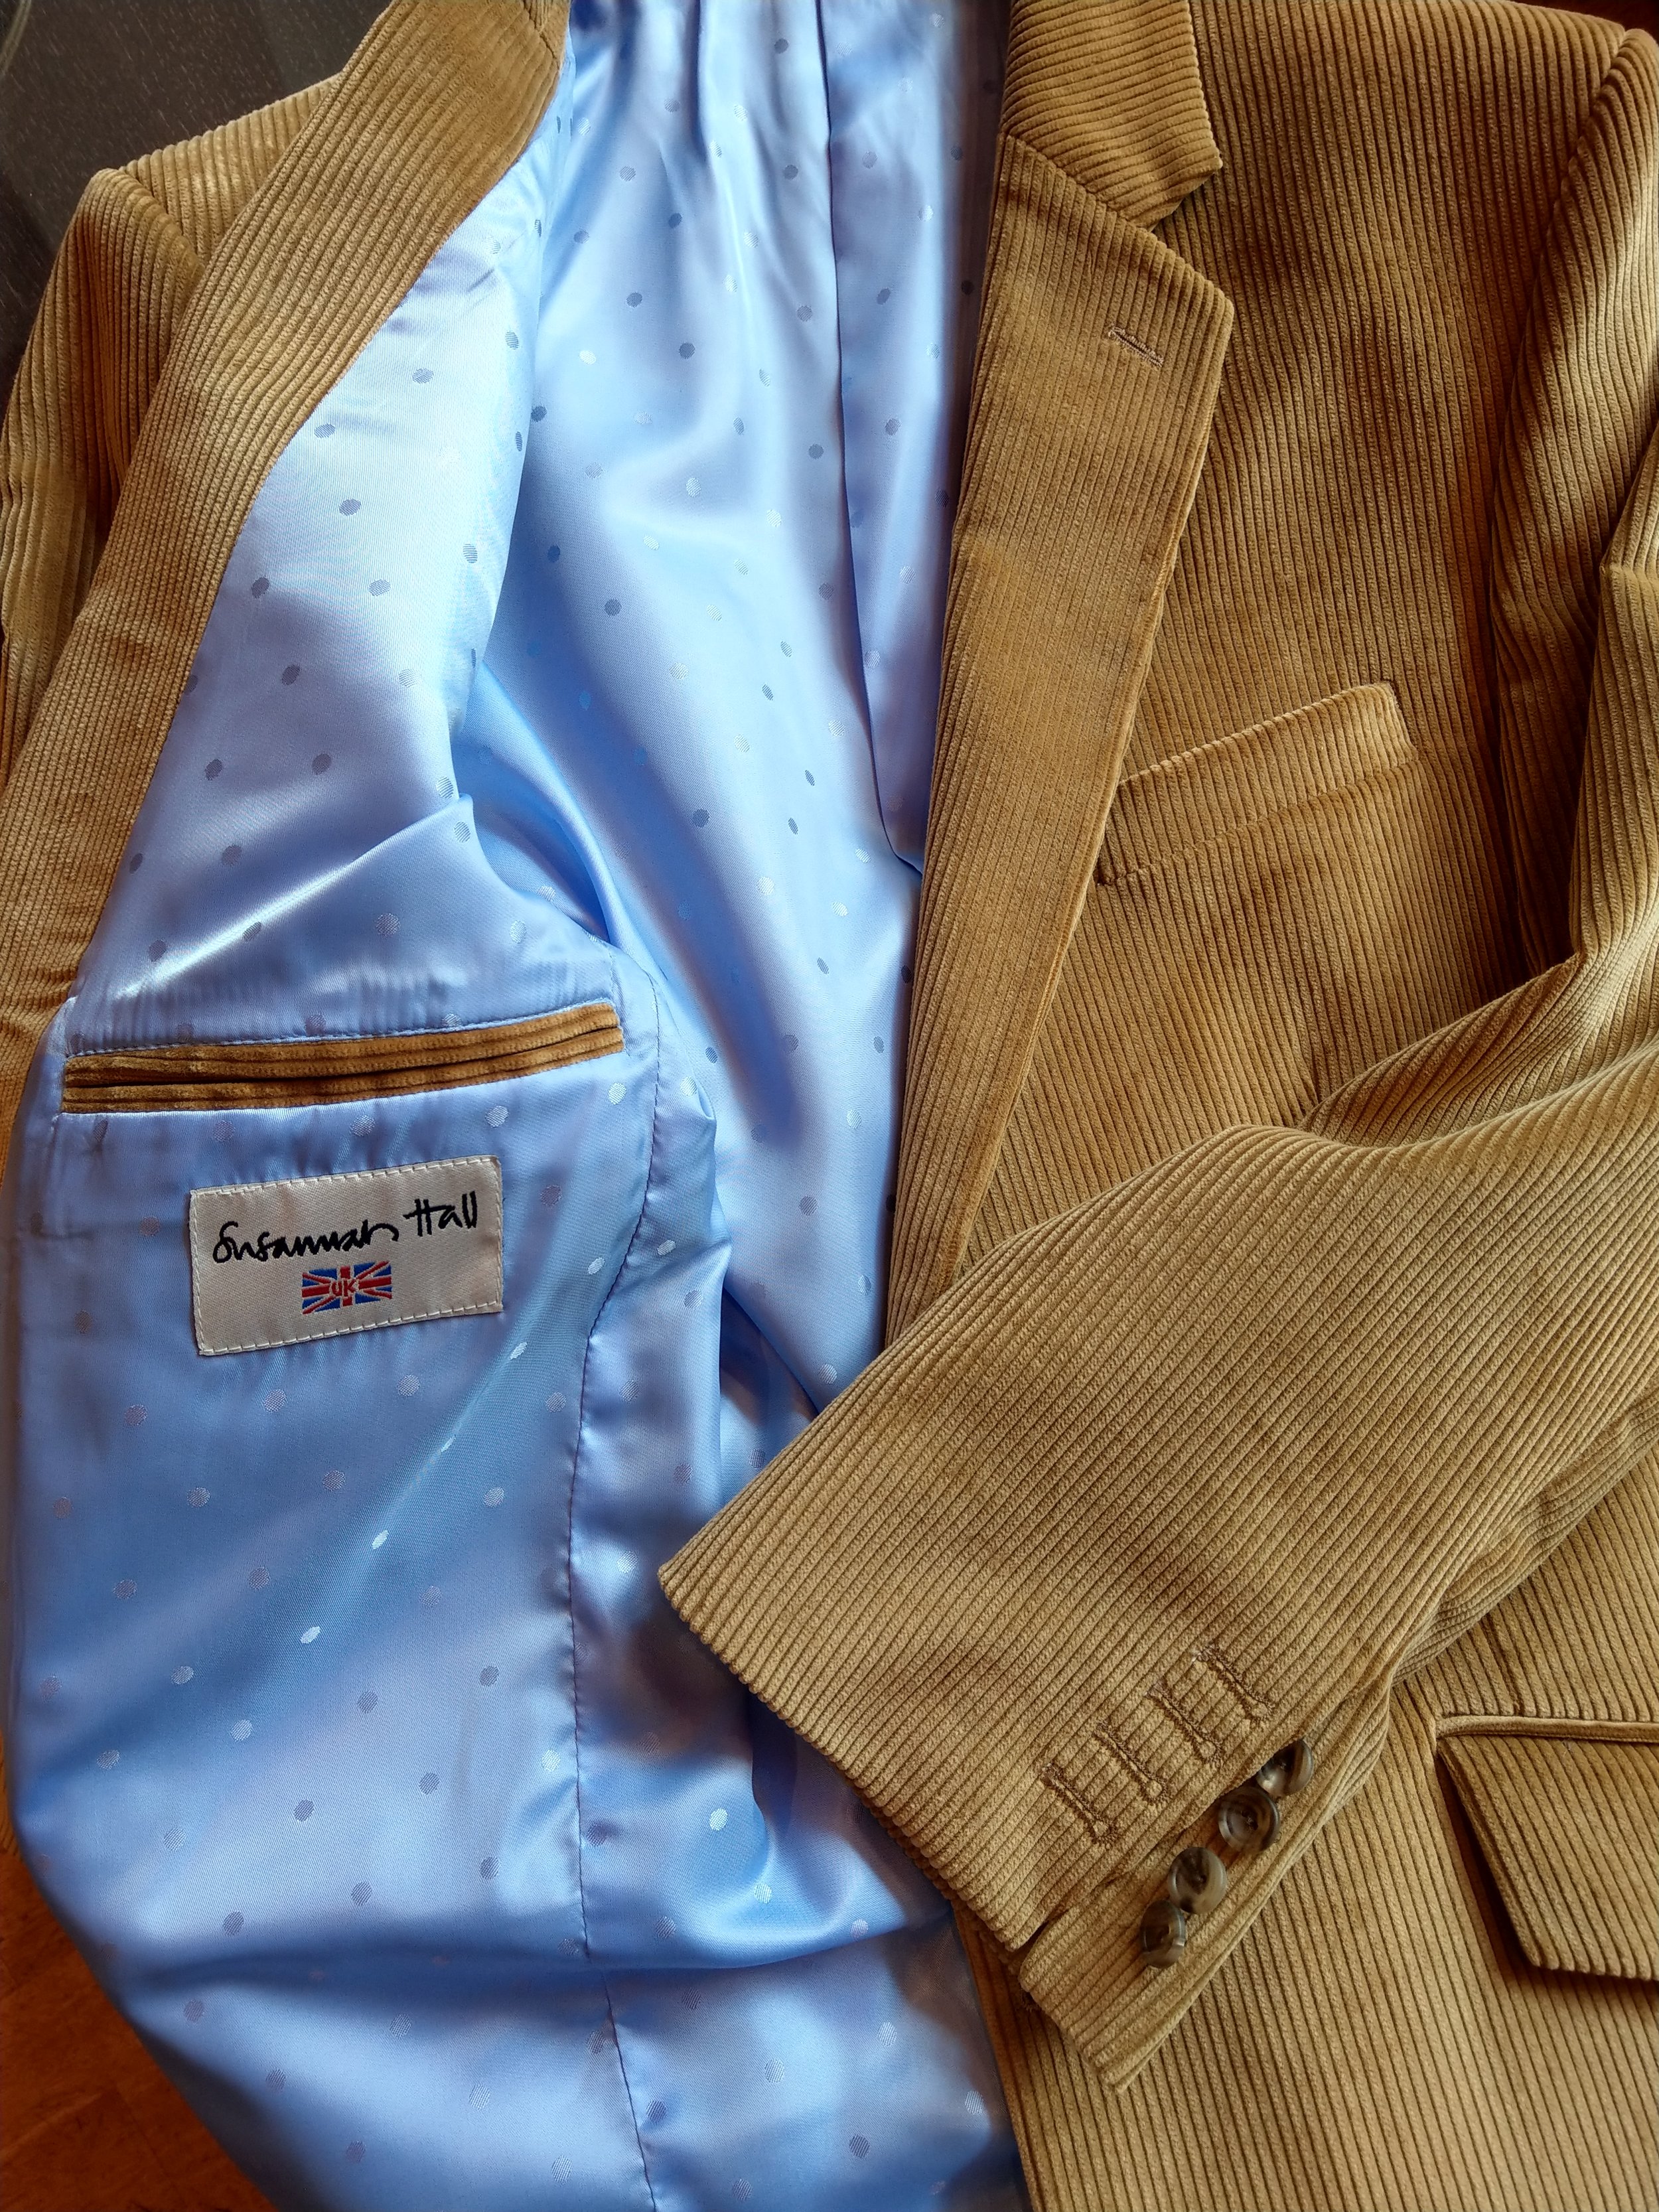 cord-jacket-bespoke-tailoring-susannah-hall-fabric-made-uk-british.jpg